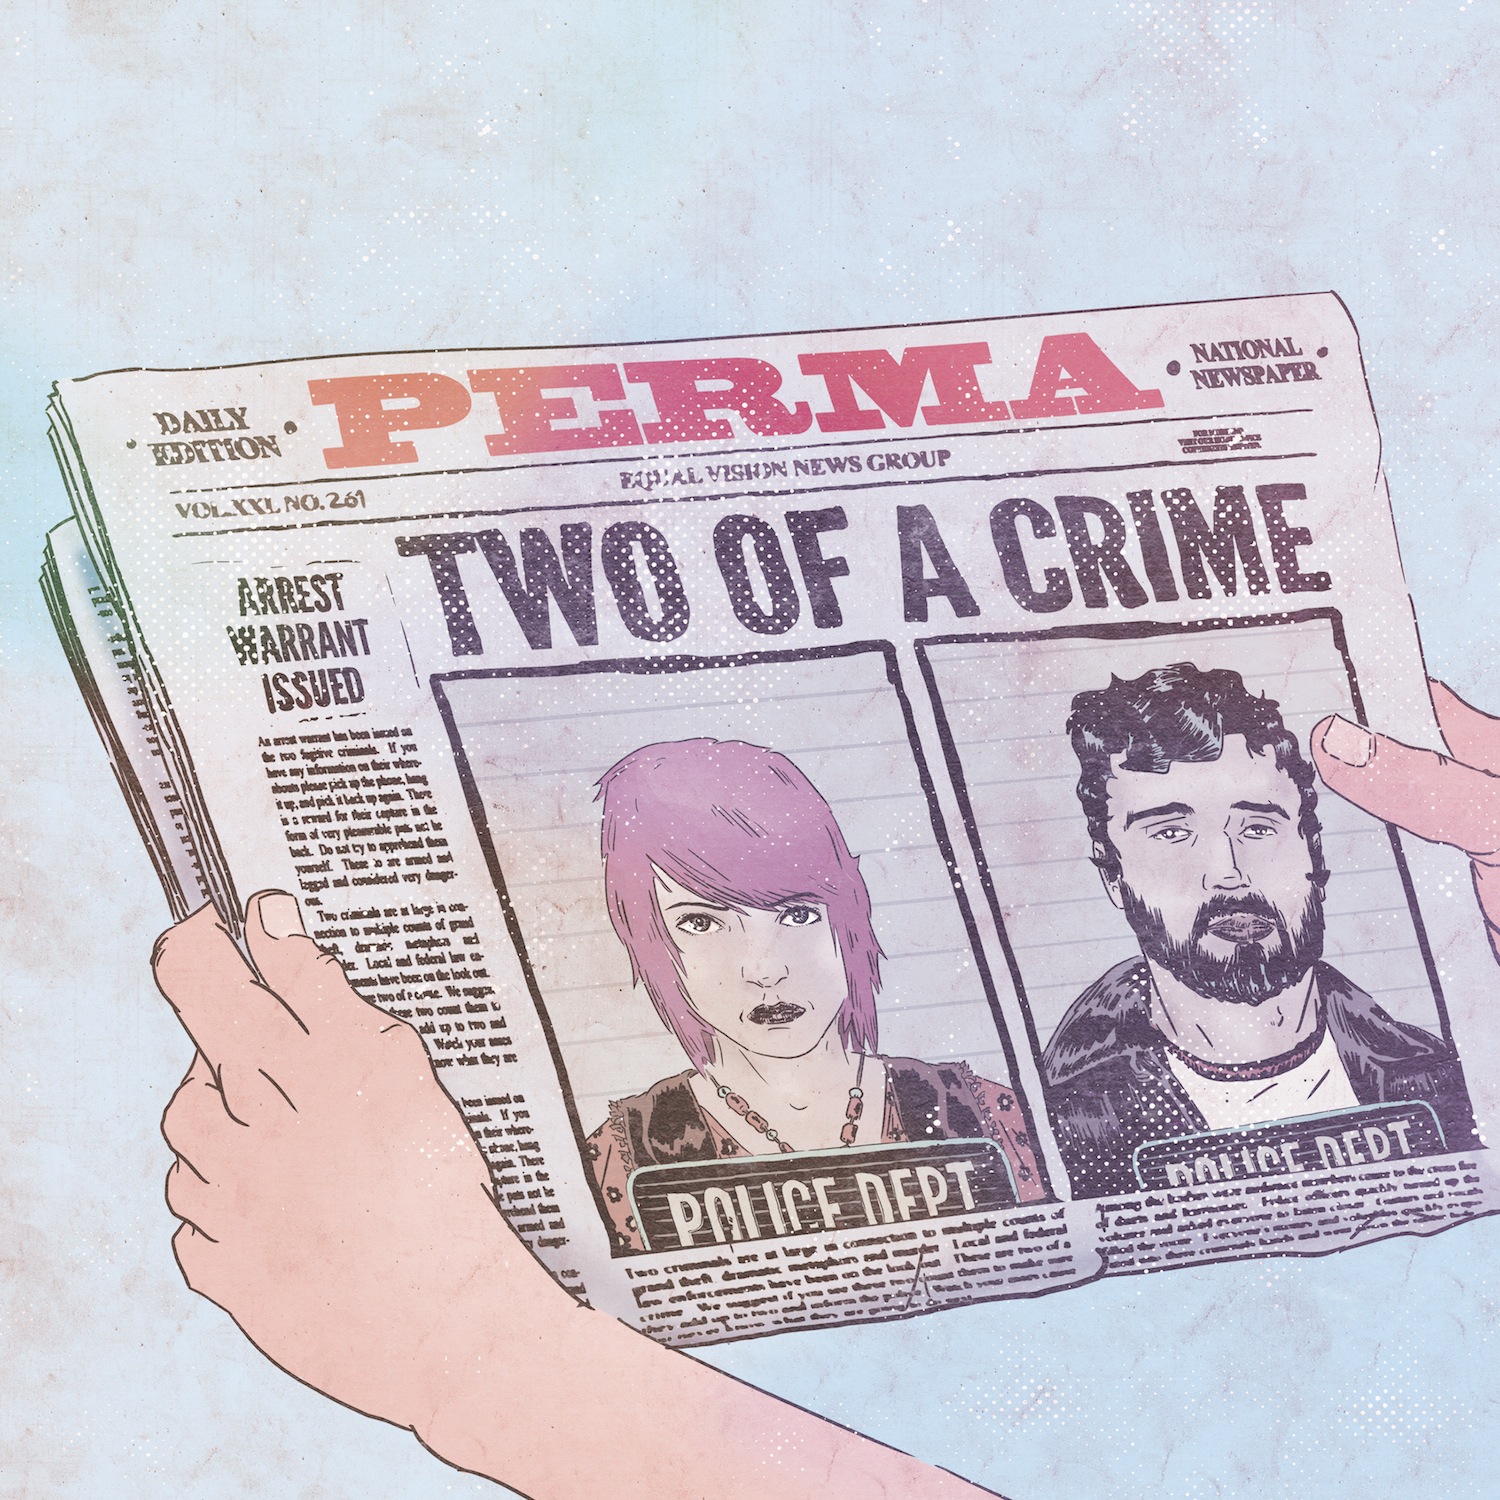 Say Anything’s Max Bemis and Eisley’s Sherri Dupree-Bemis Announce <i>Two of a Crime</i>, Perma’s Debut Full-Length Album